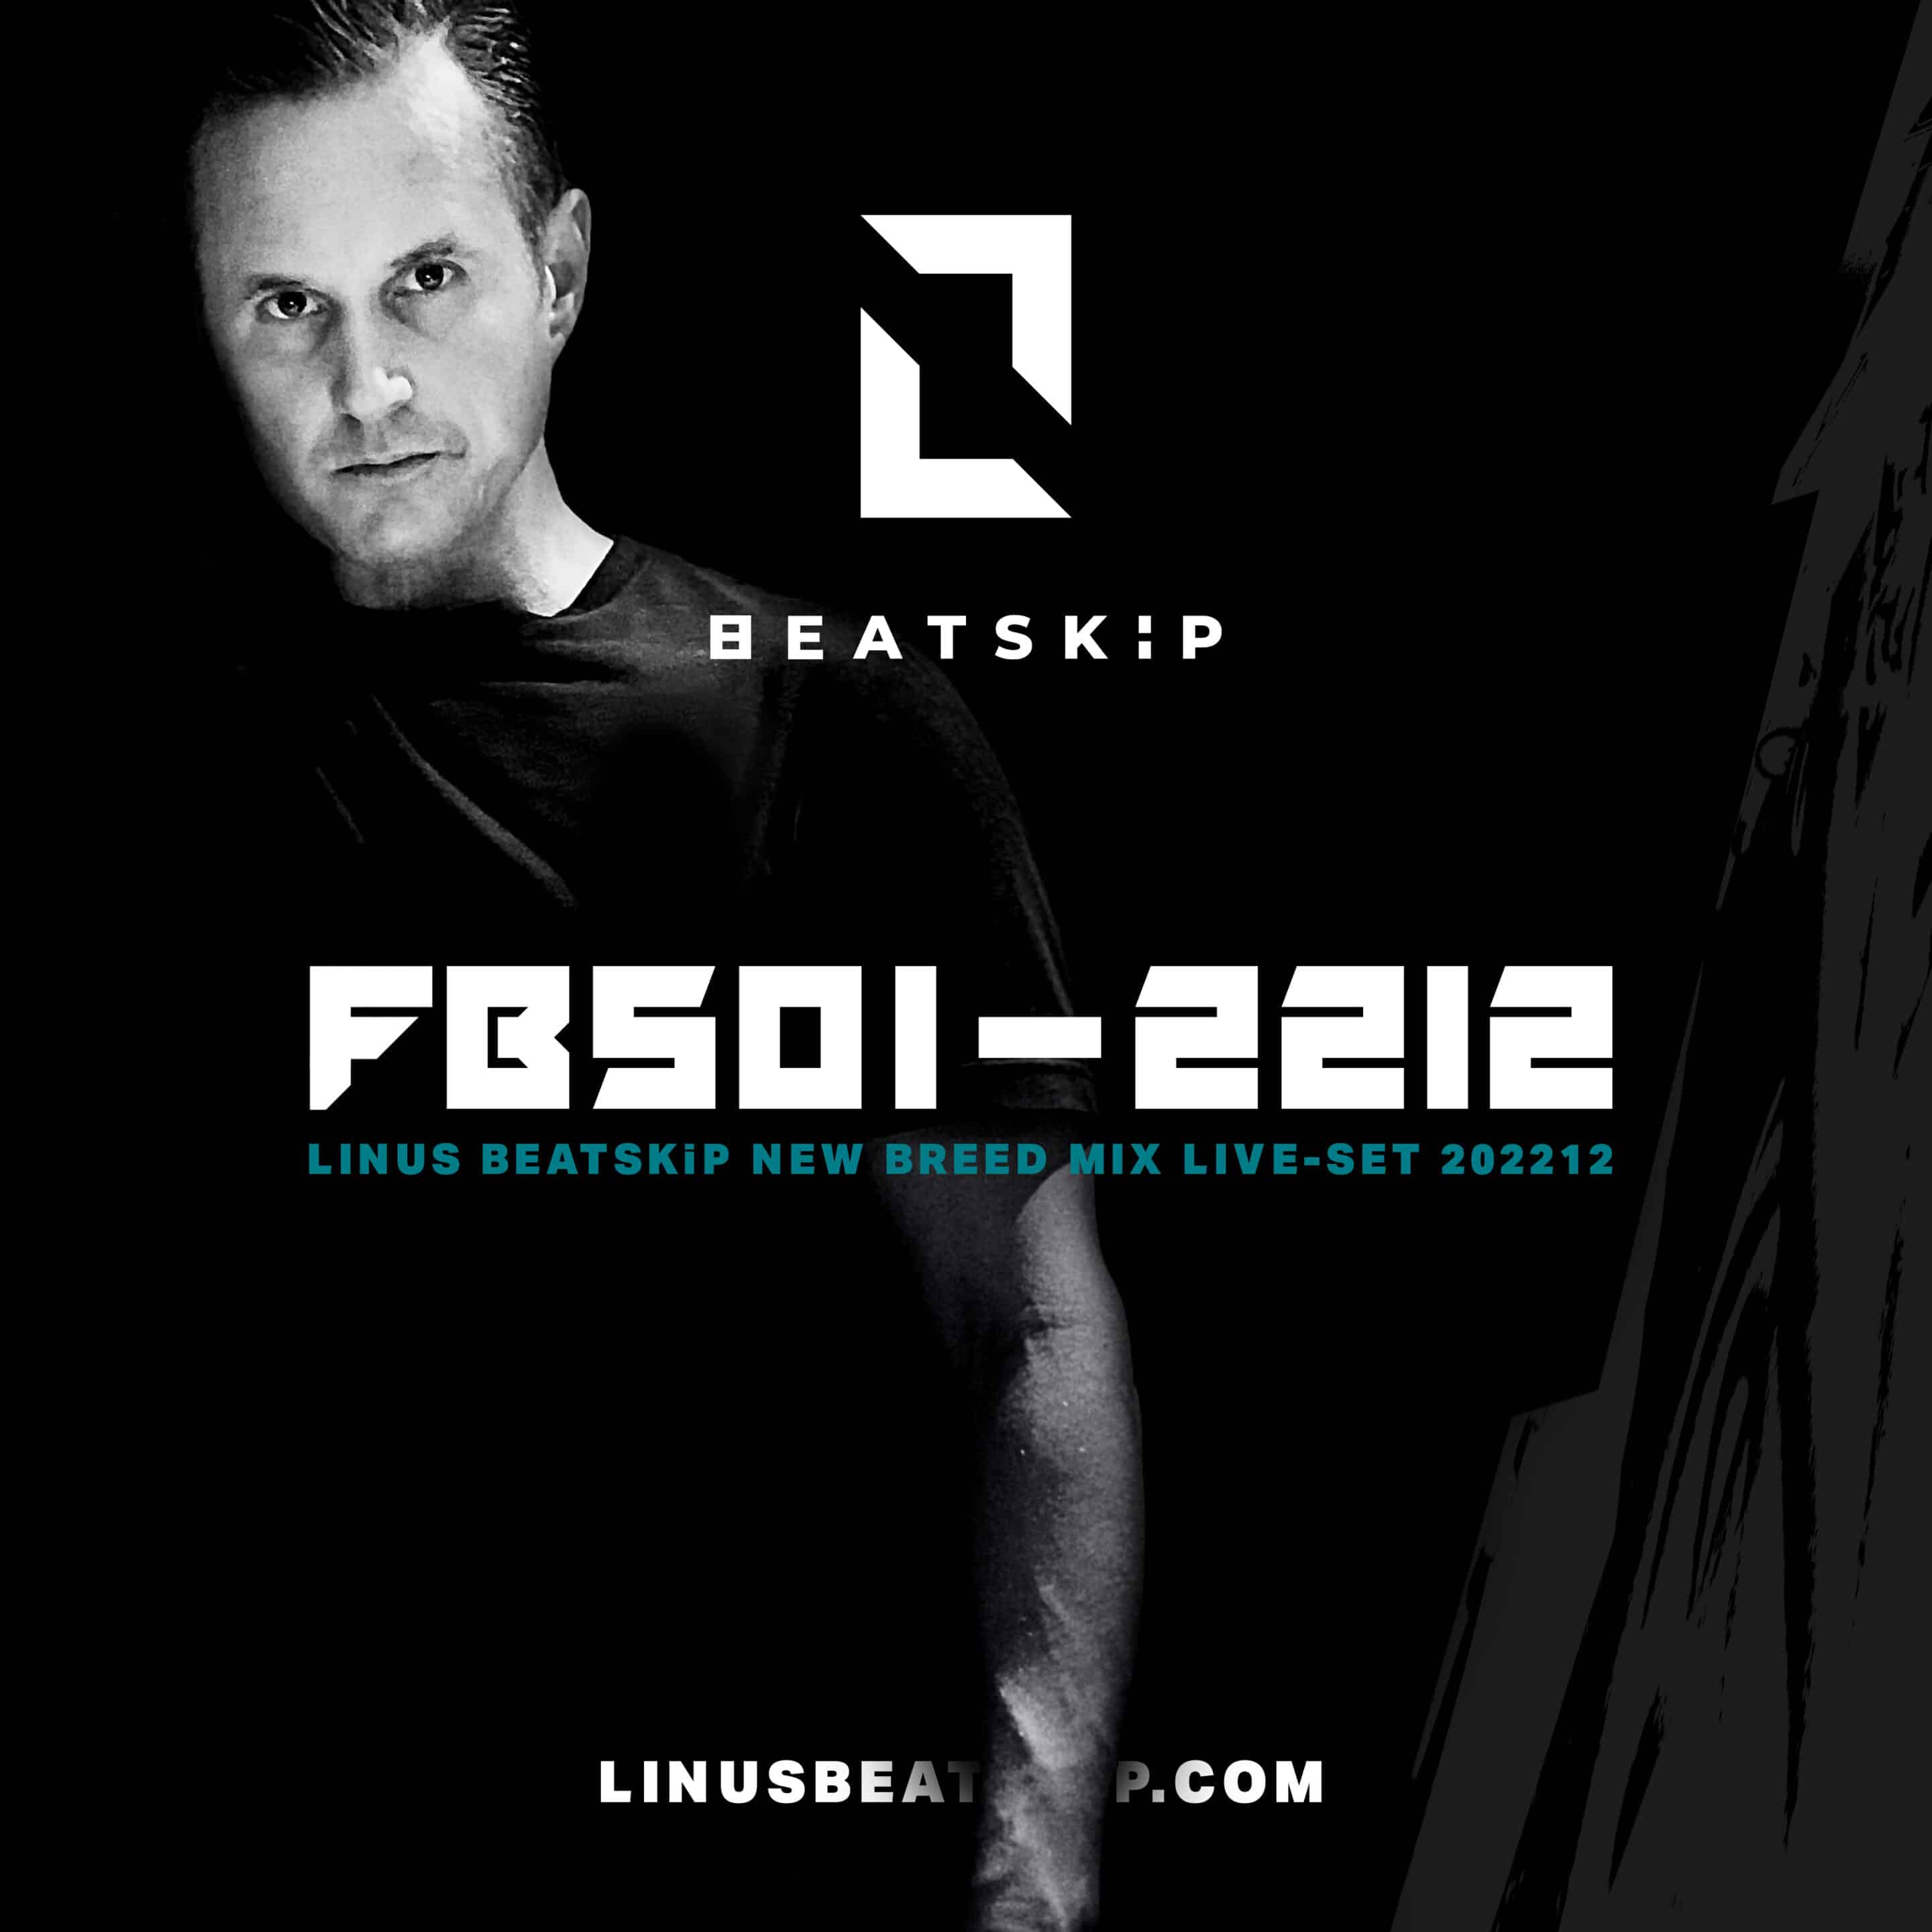 FBS02-2212 - LINUS BEATSKiP New Breed short mix live set - Frequencies of Beatskip